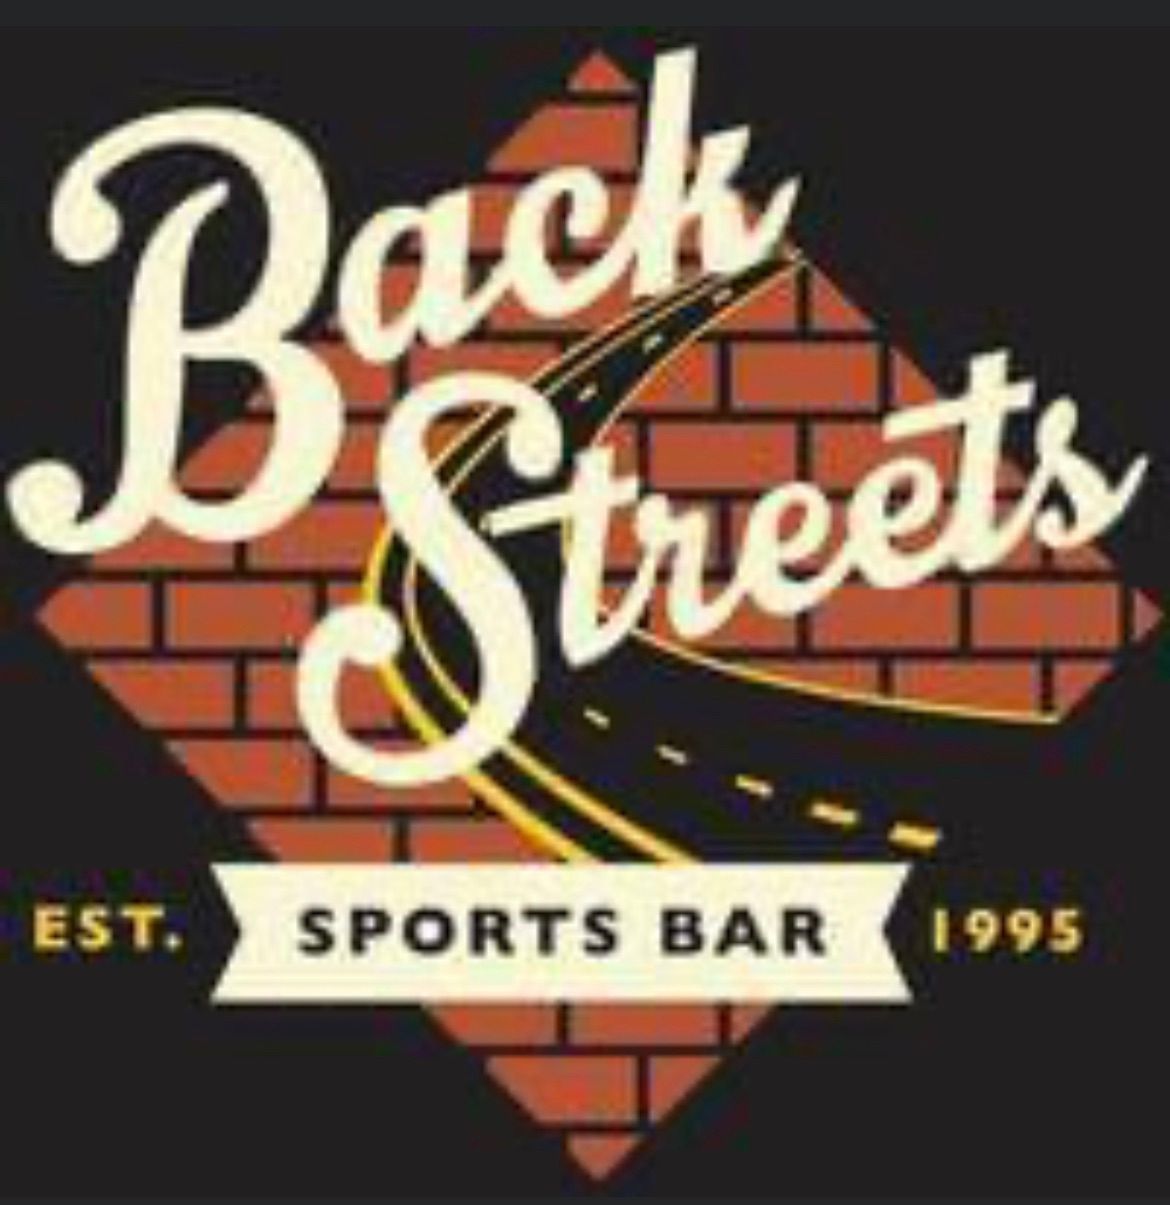 BackStreets Sports Bar! 